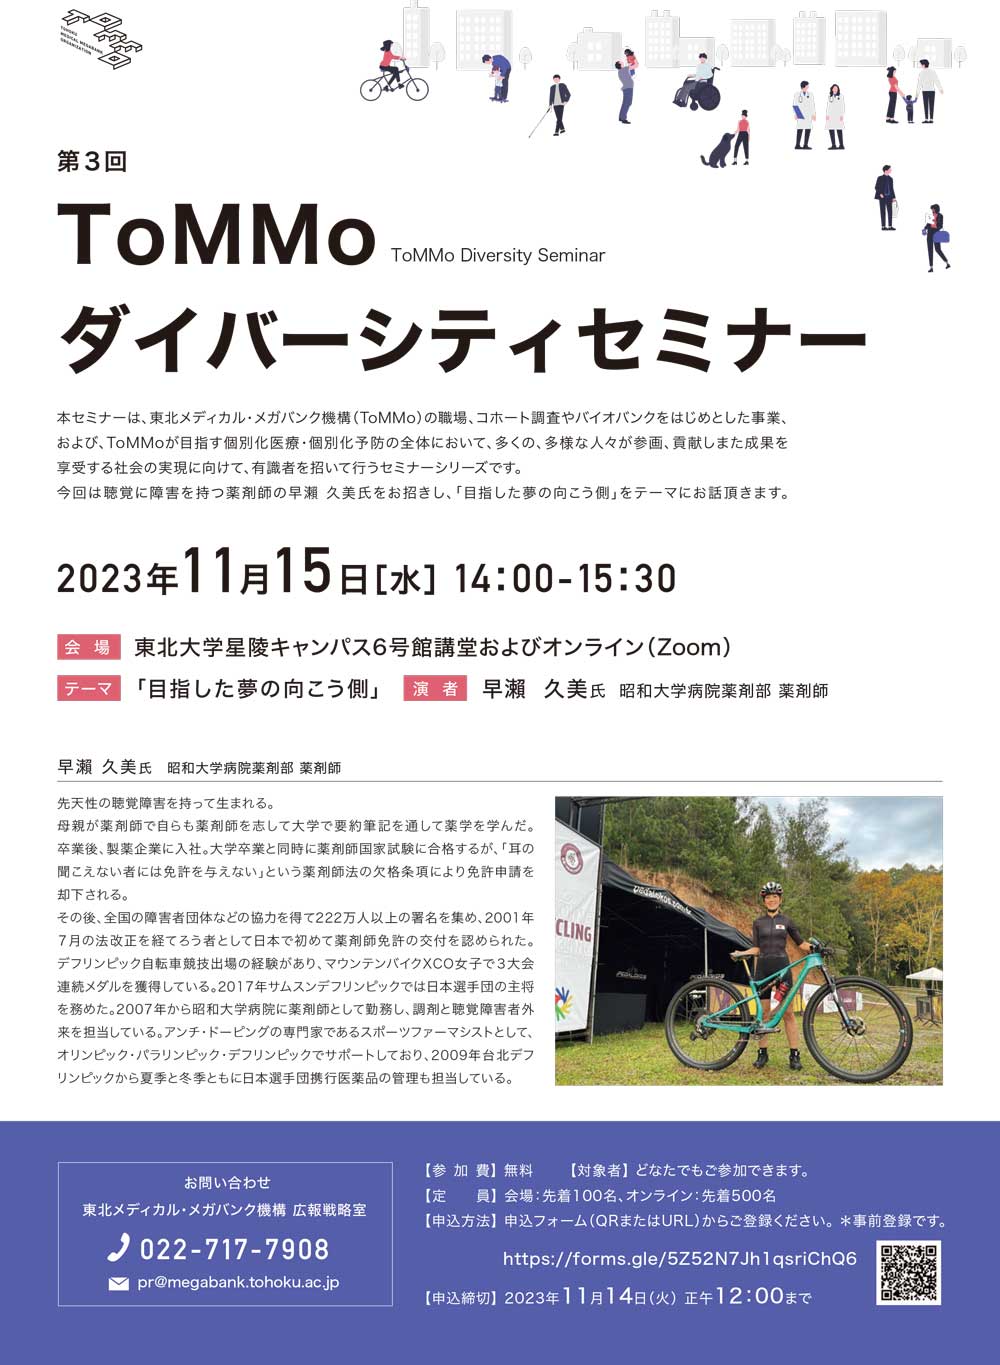 ToMMo (@TohokuMedMbank) / X